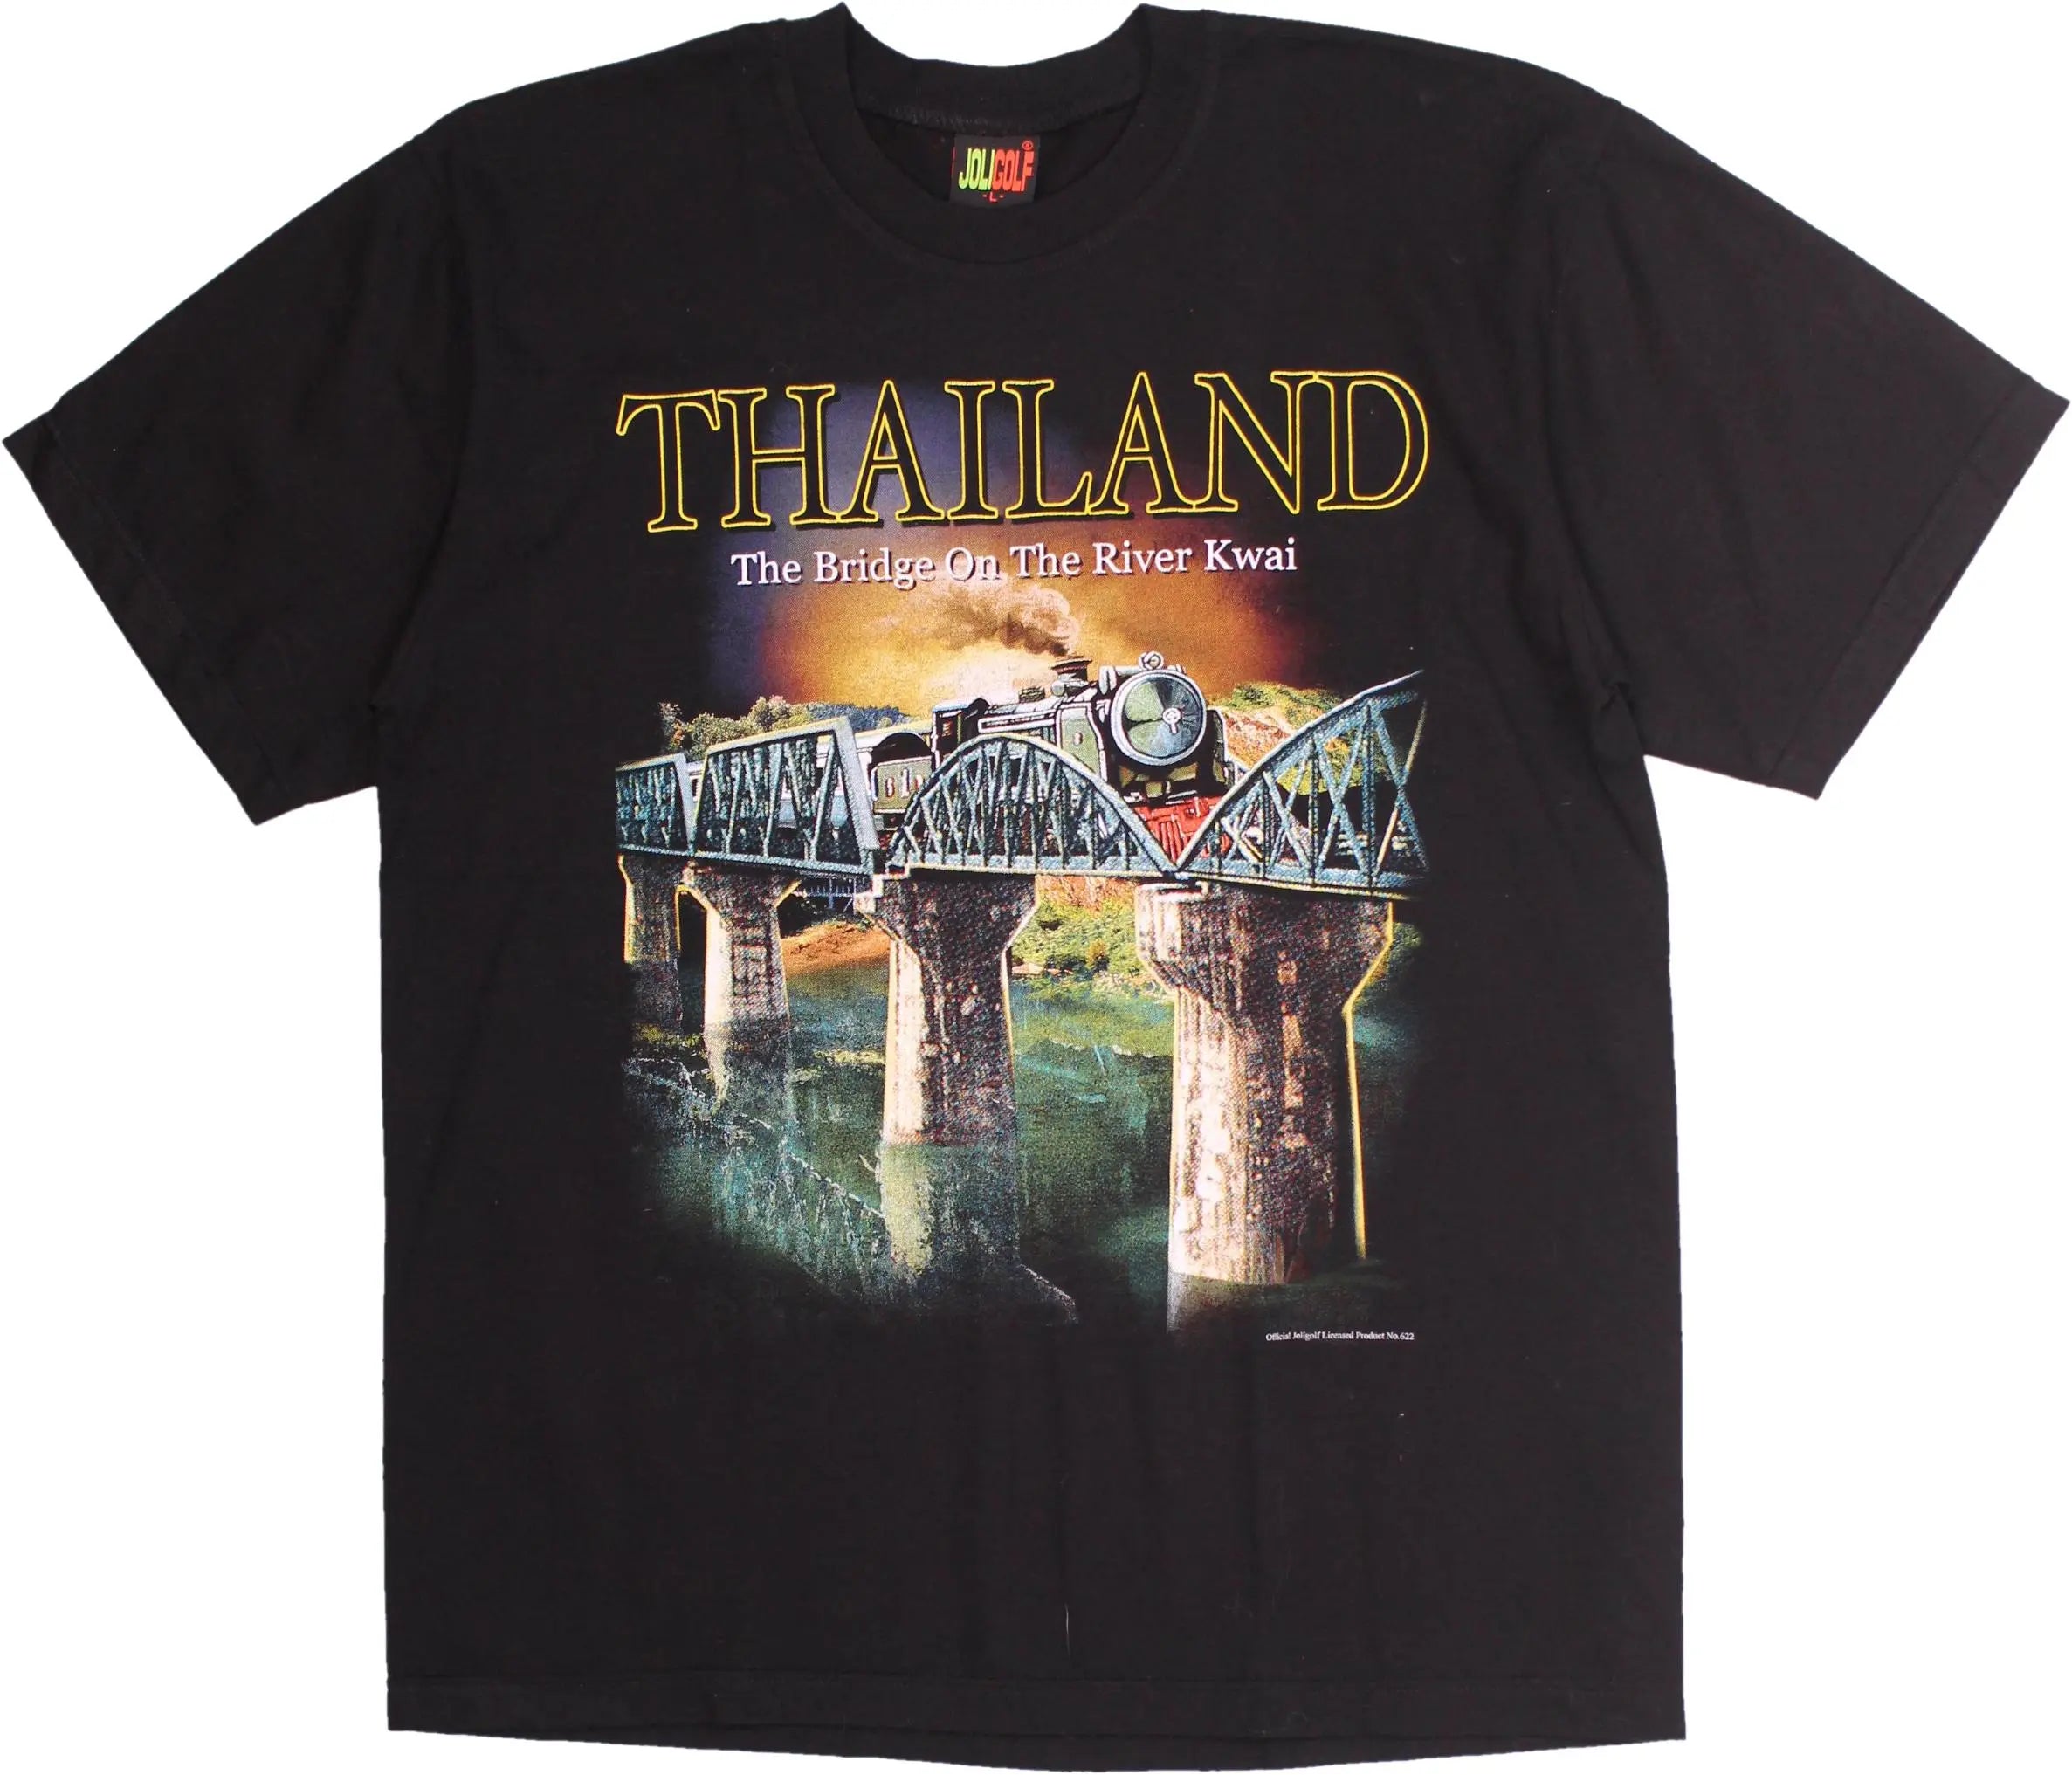 Joligolf - Thailand T-shirt- ThriftTale.com - Vintage and second handclothing